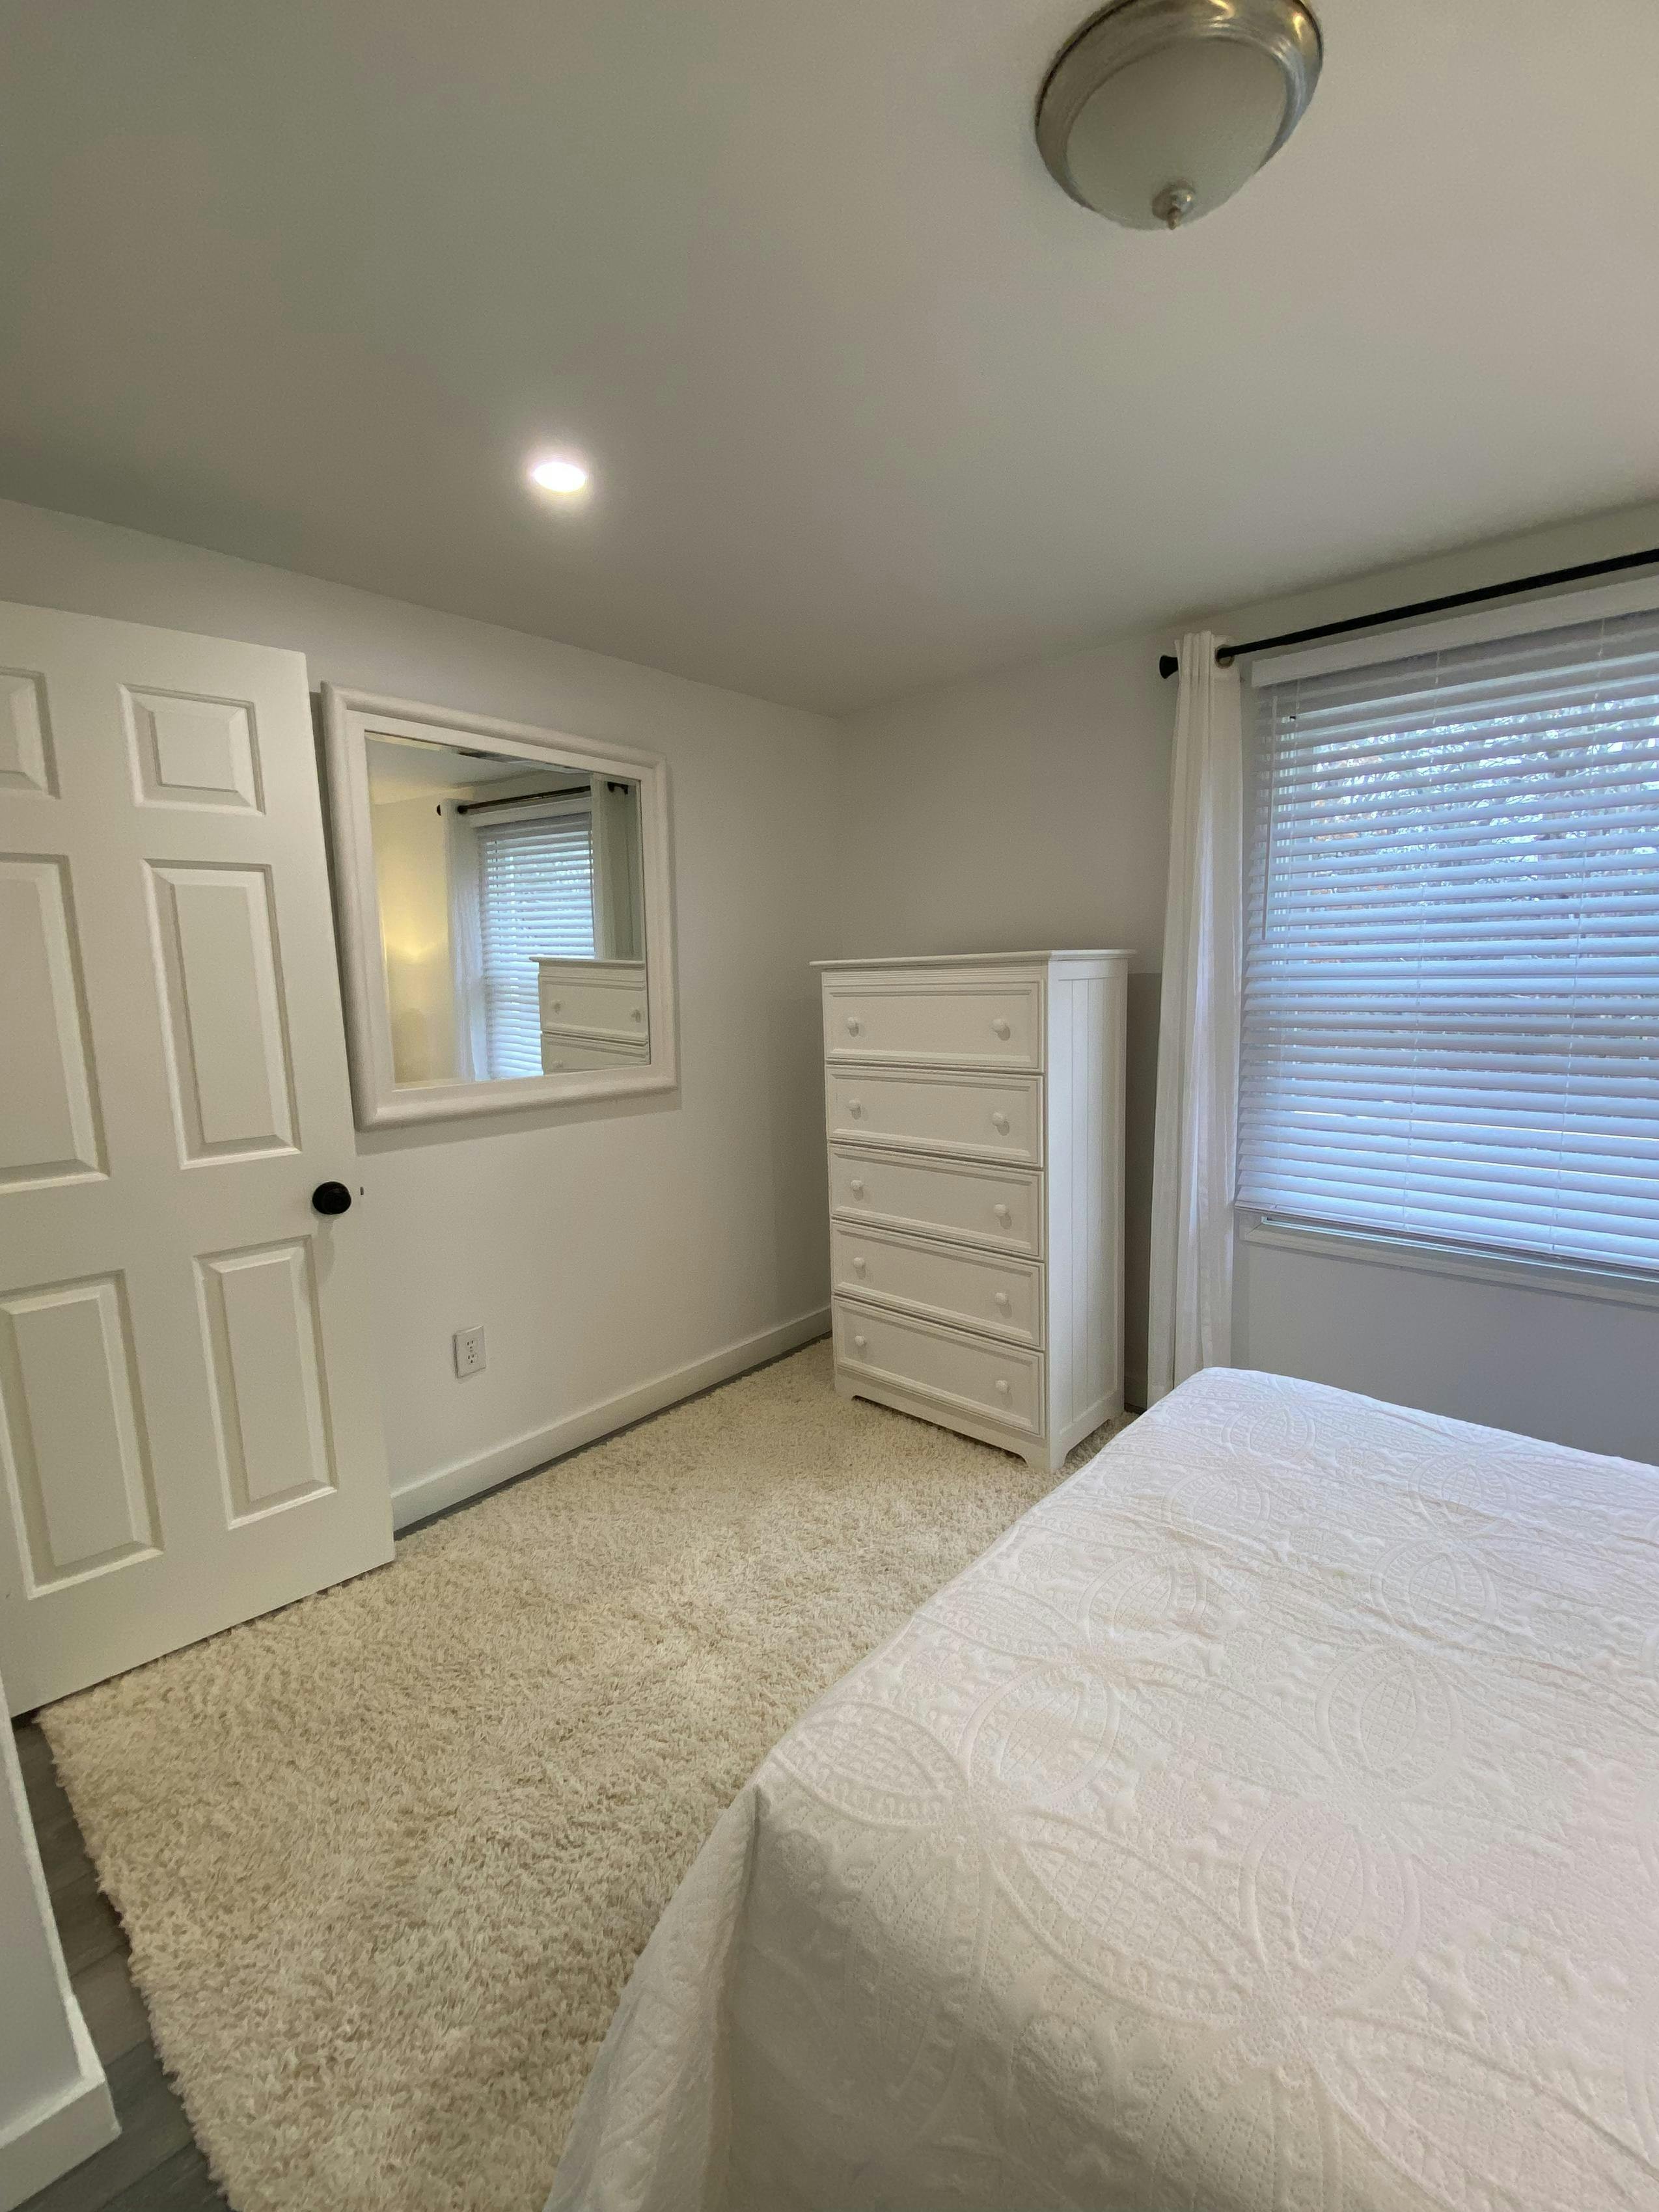 Image 1 - 4 Bedroom Rental in Edgartown, Other - Sleeps 10